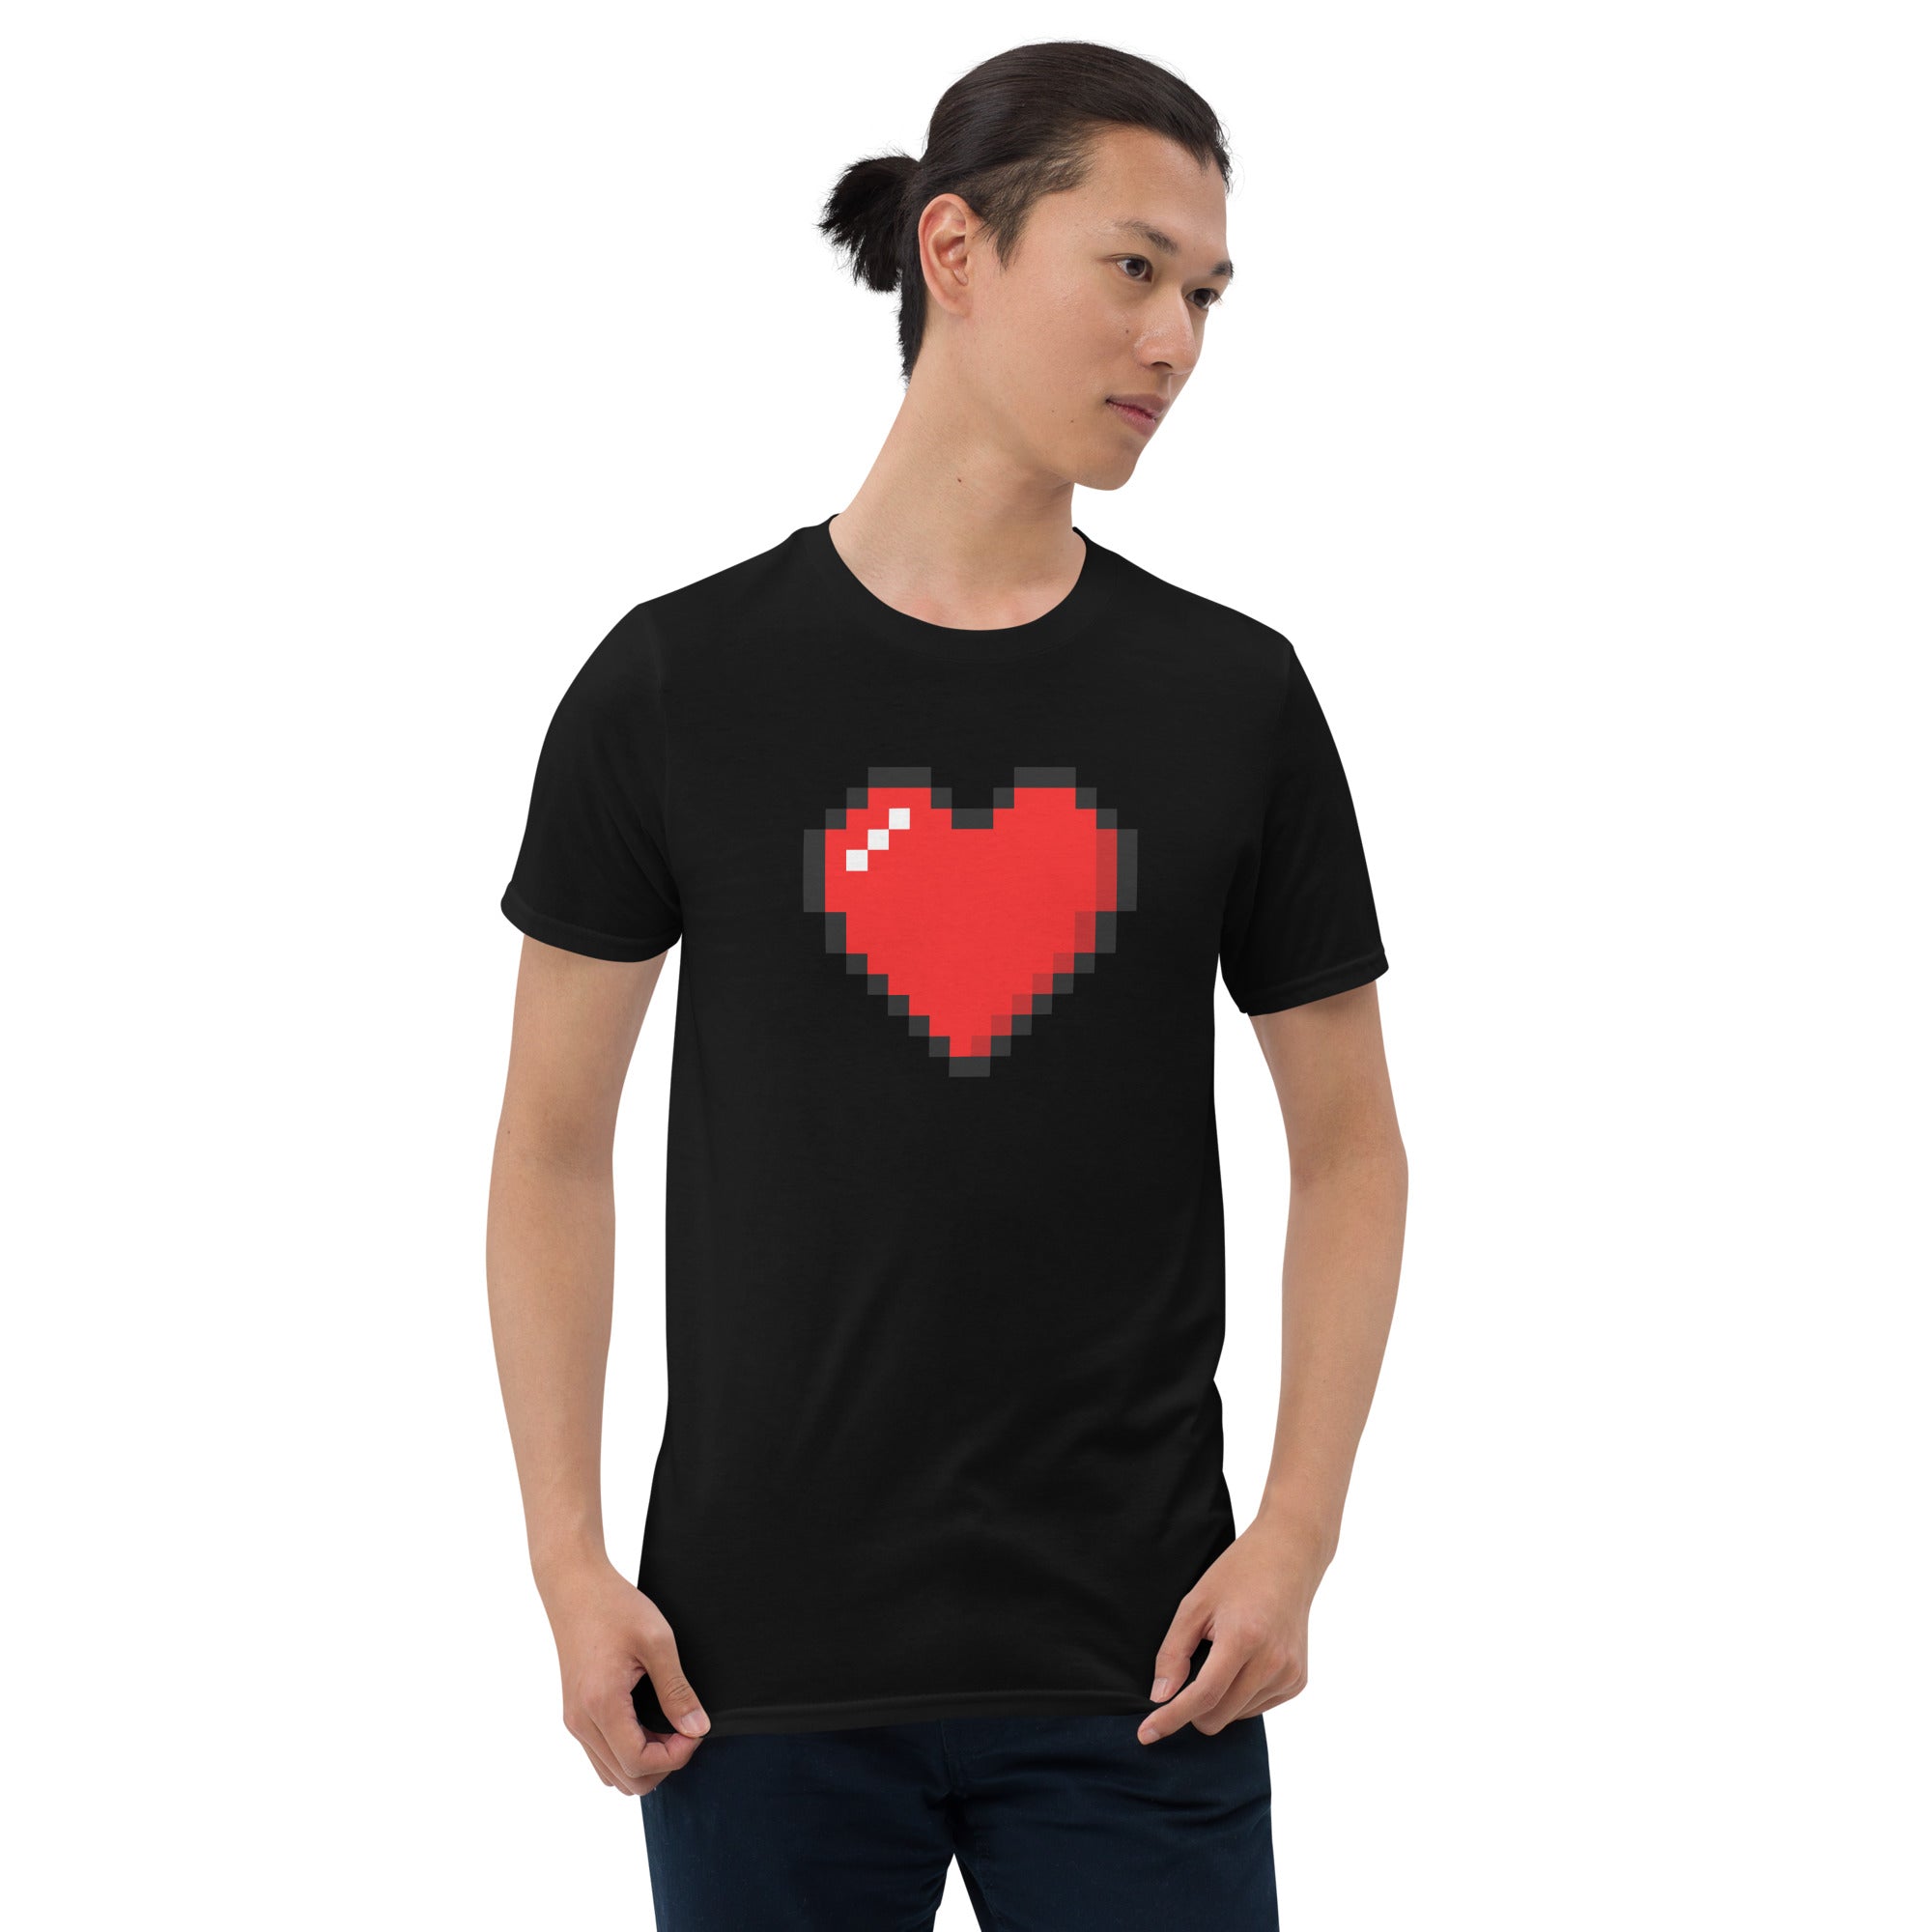 Retro 8 Bit Video Game Pixelated Heart Short-Sleeve T-Shirt